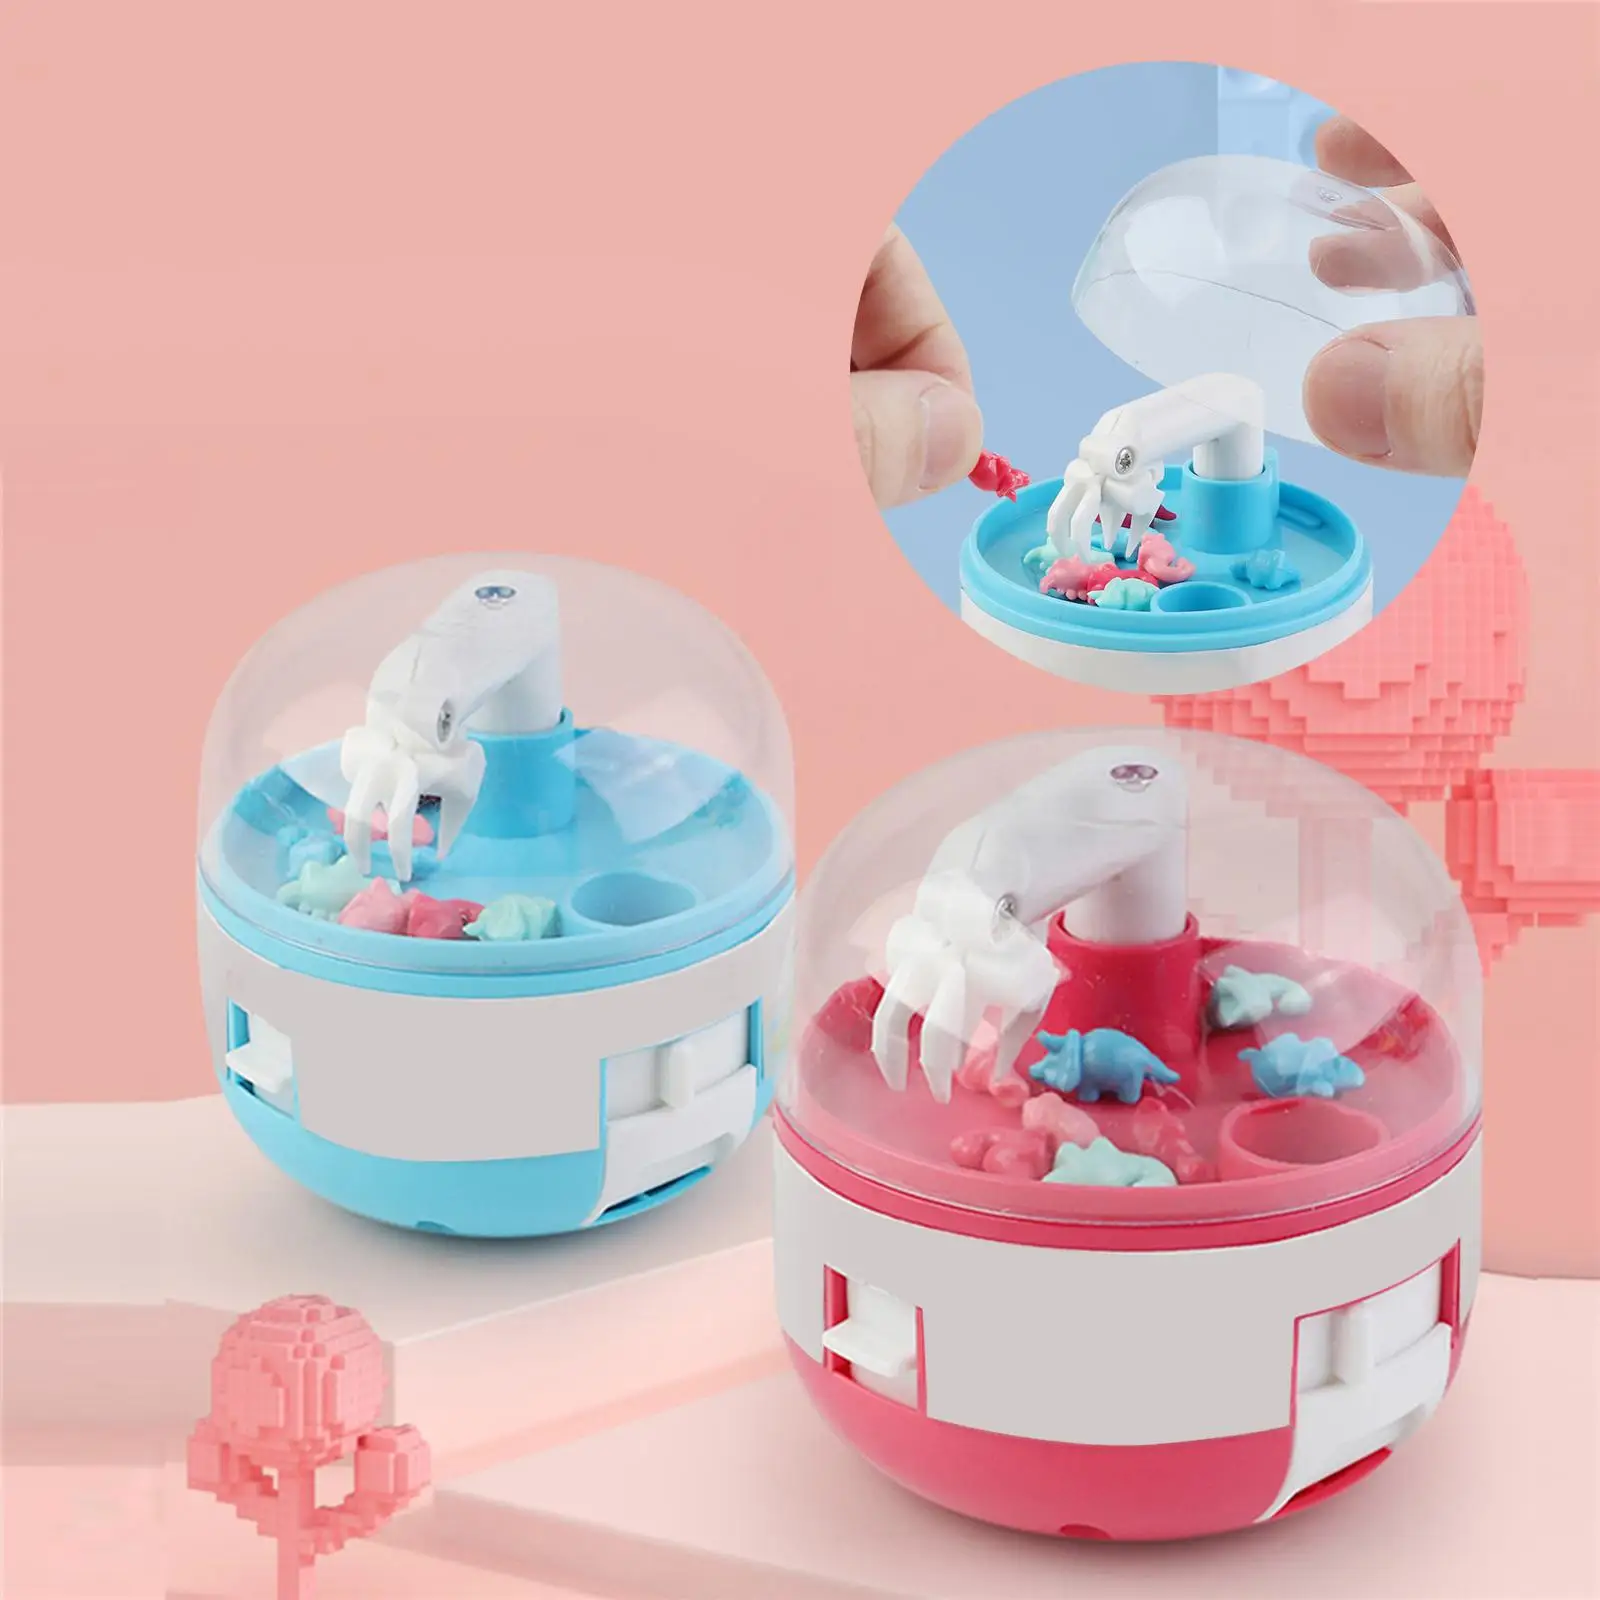 Machine Miniature Grabber Fingertip Toys for Birthday Party Kids